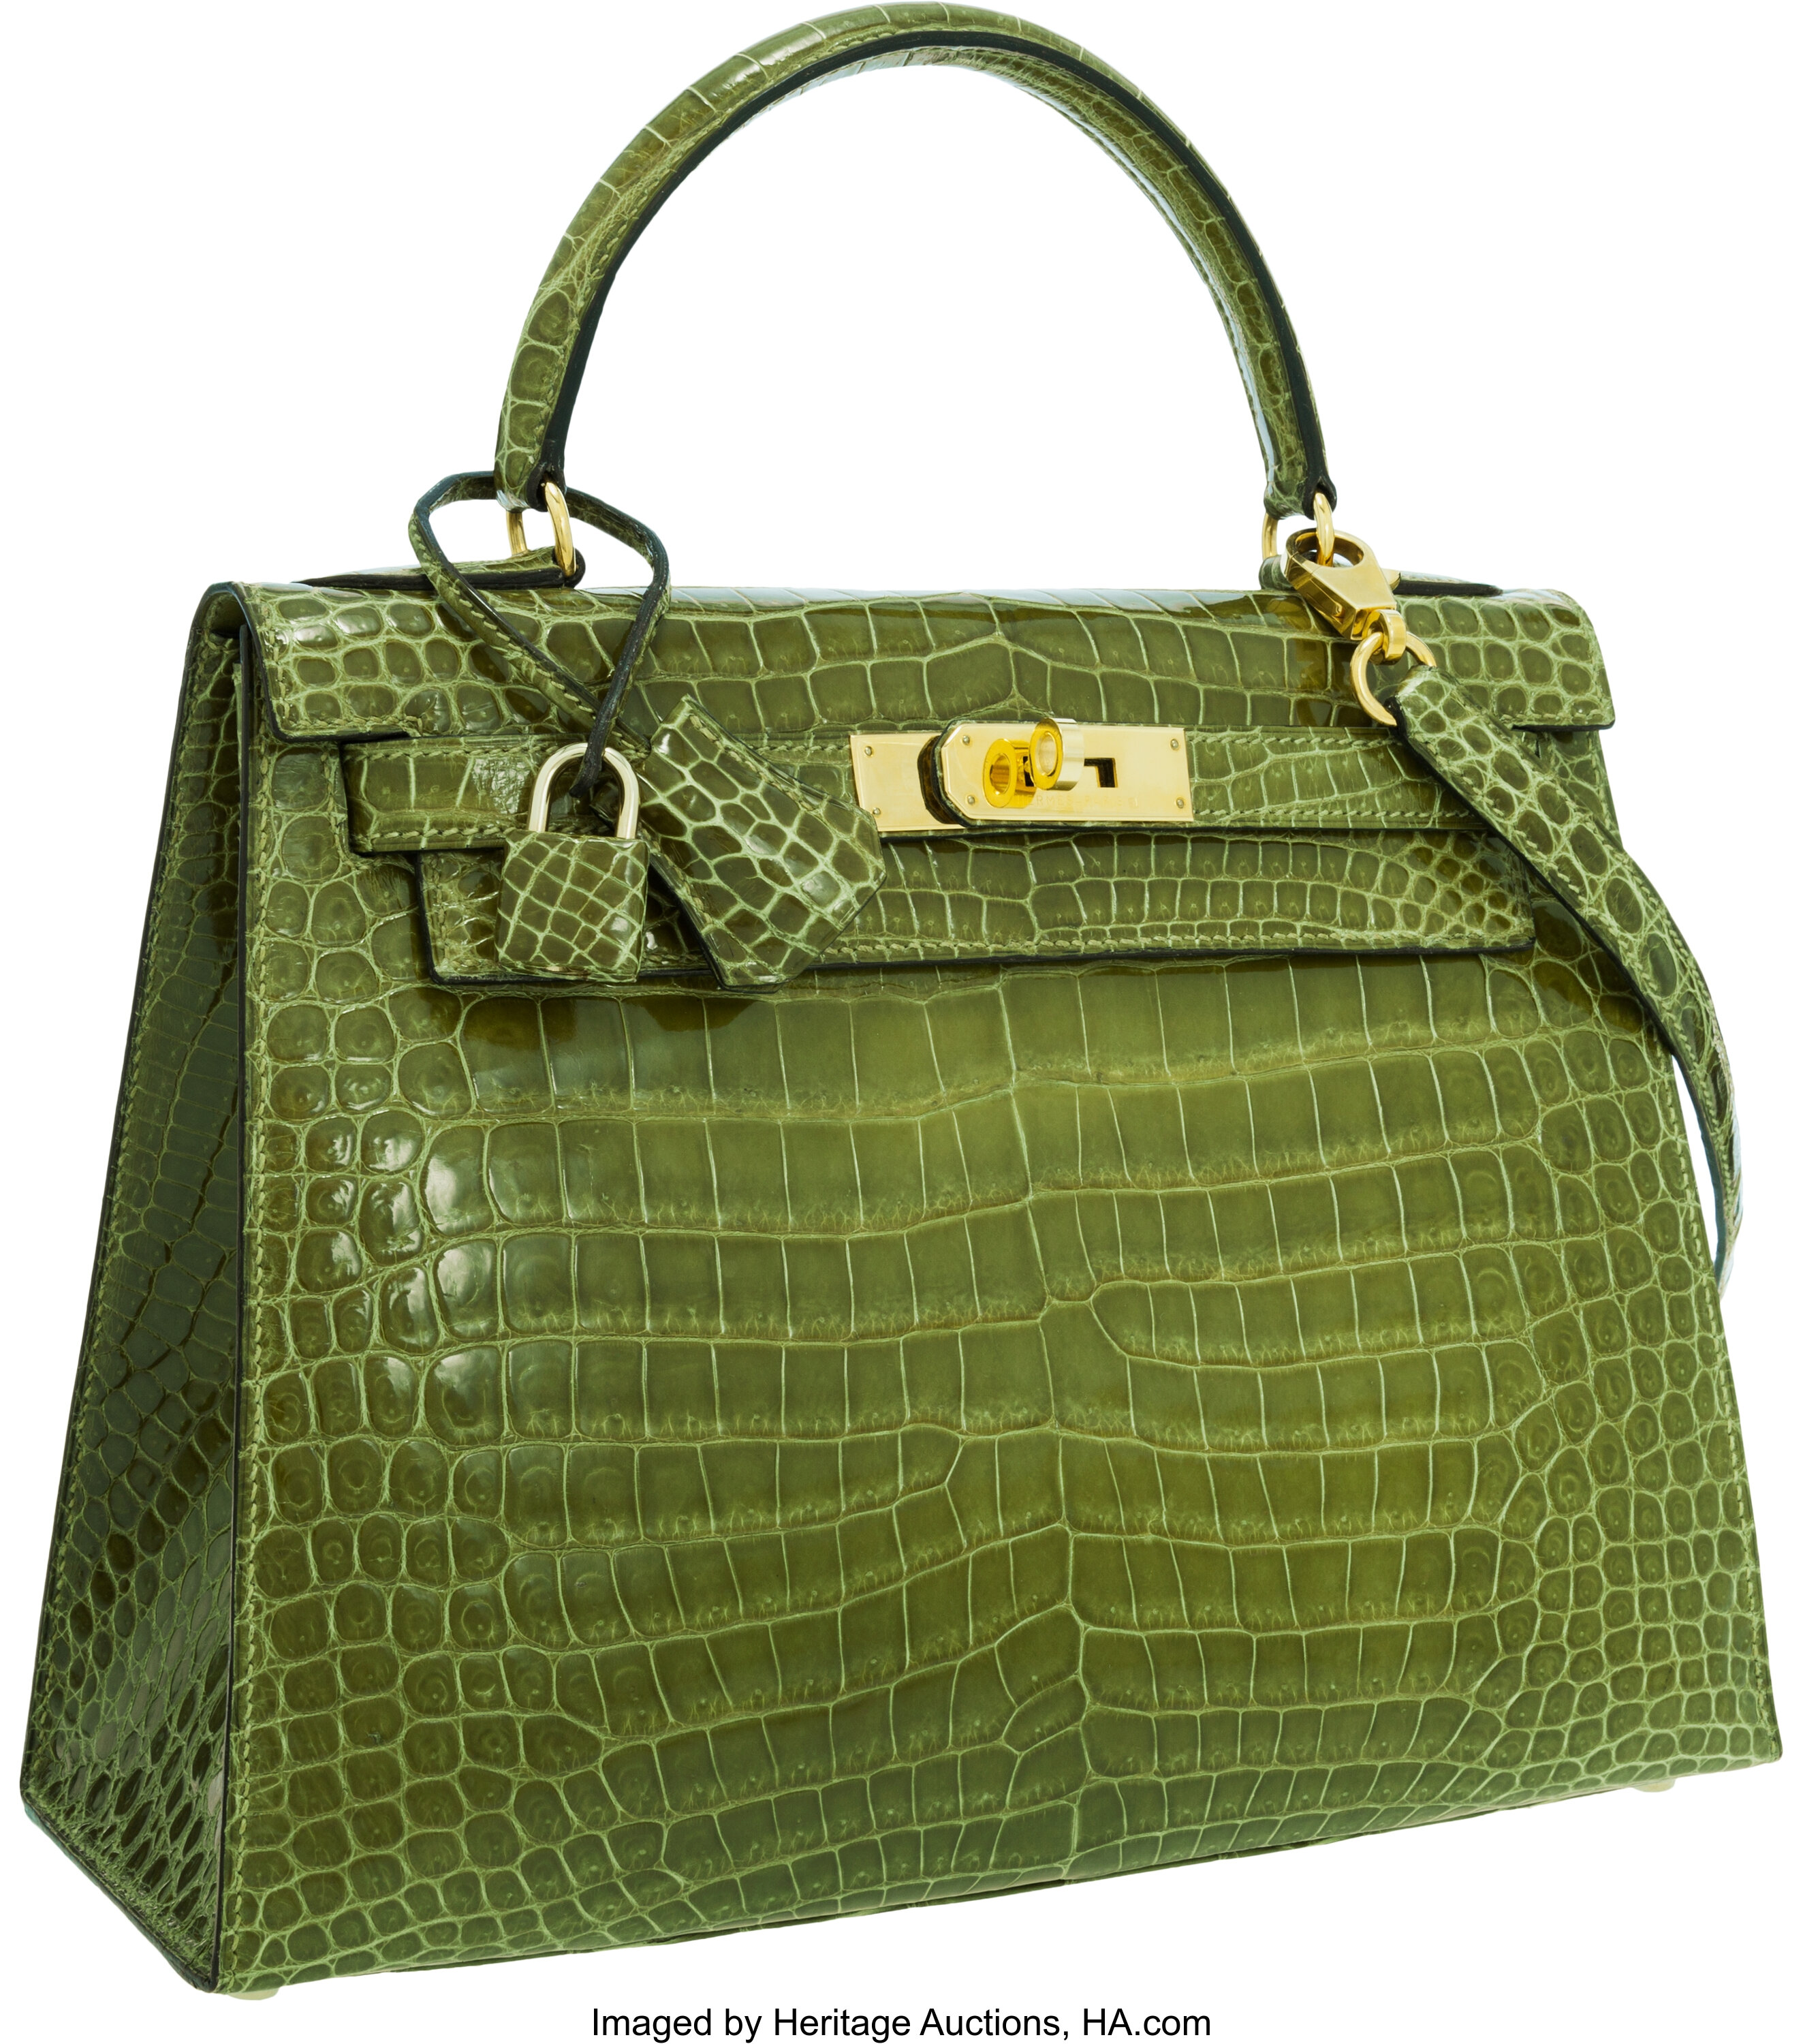 Goldmas shiny two tone green limited crocodile handbags